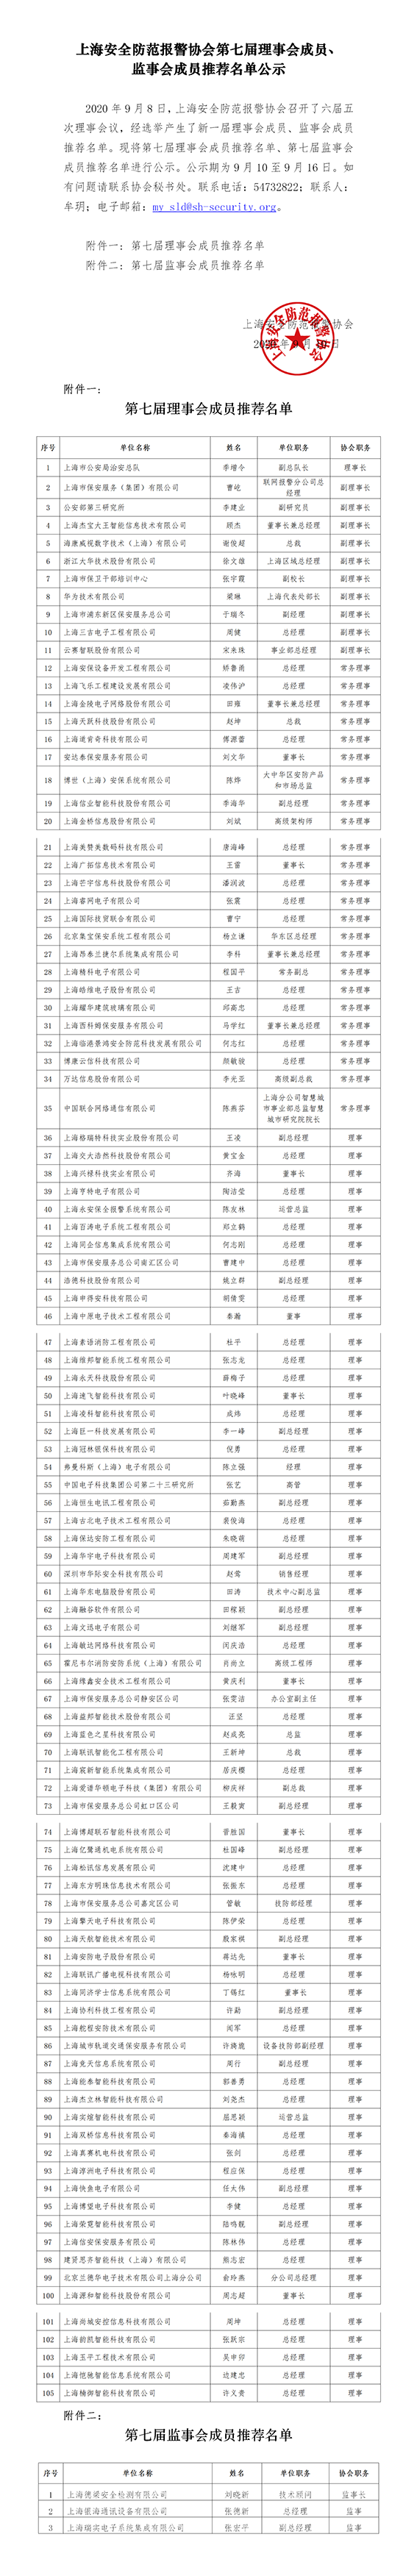 wx上海安全防范报警协会第七届理事会成员、监事会成员推荐名单公示.png